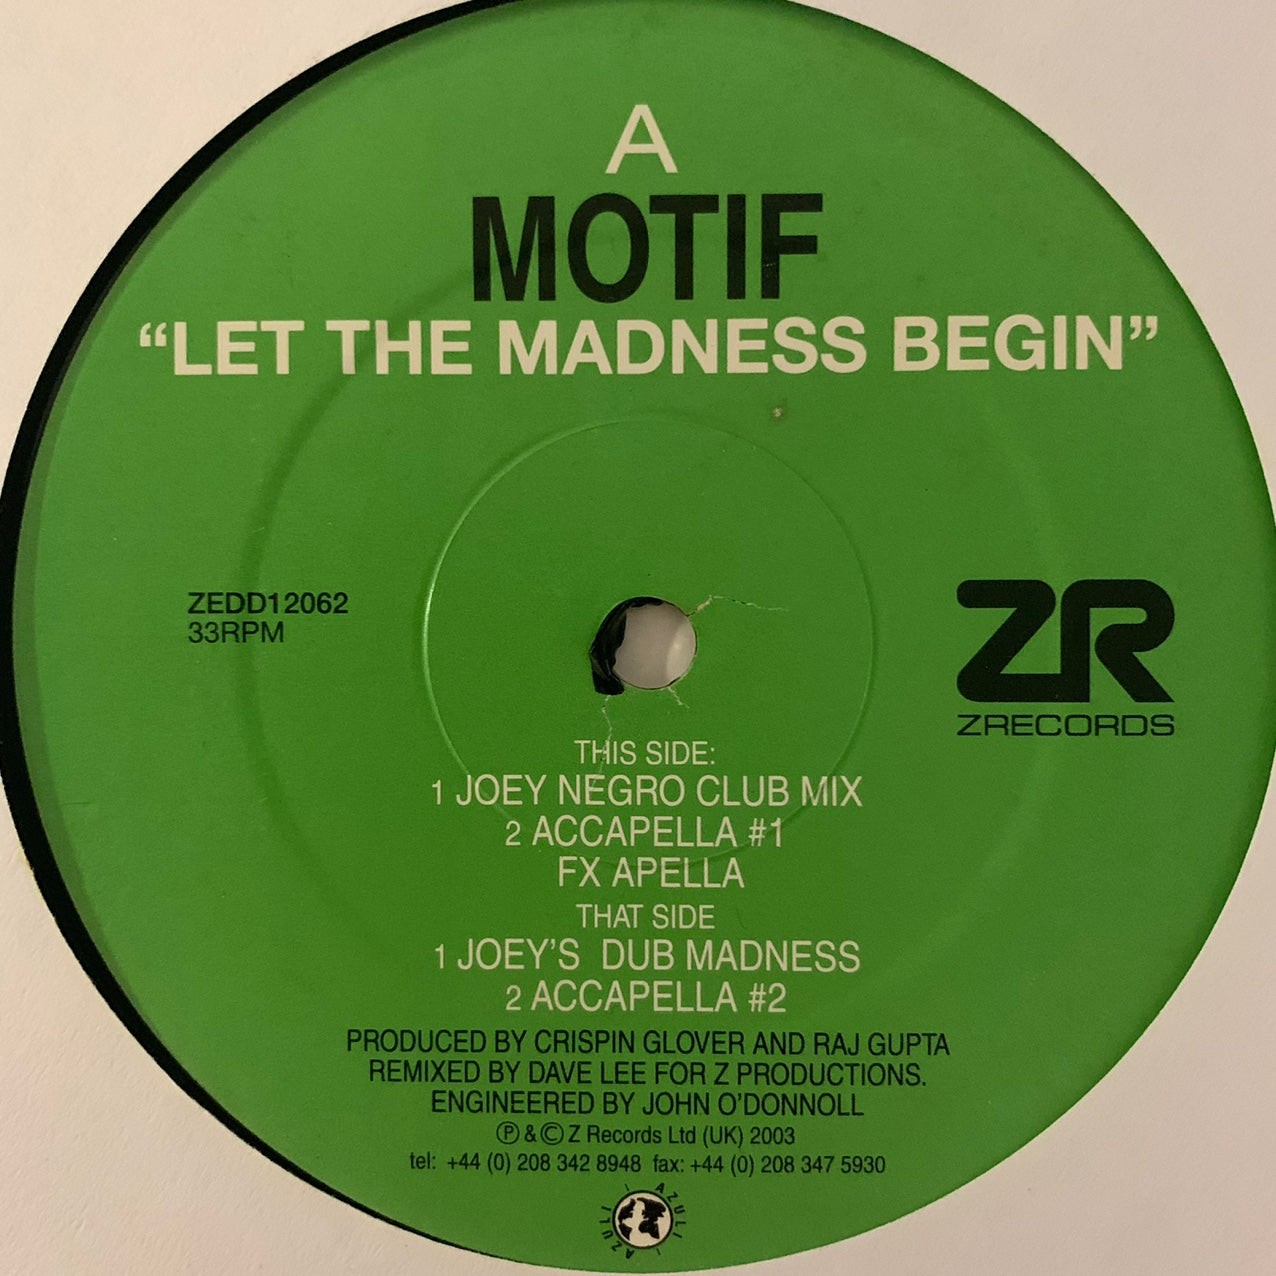 Crispin Glover & Raj Gupta Present Motif “Let The Madness Begin” 4 Track 12inch Vinyl